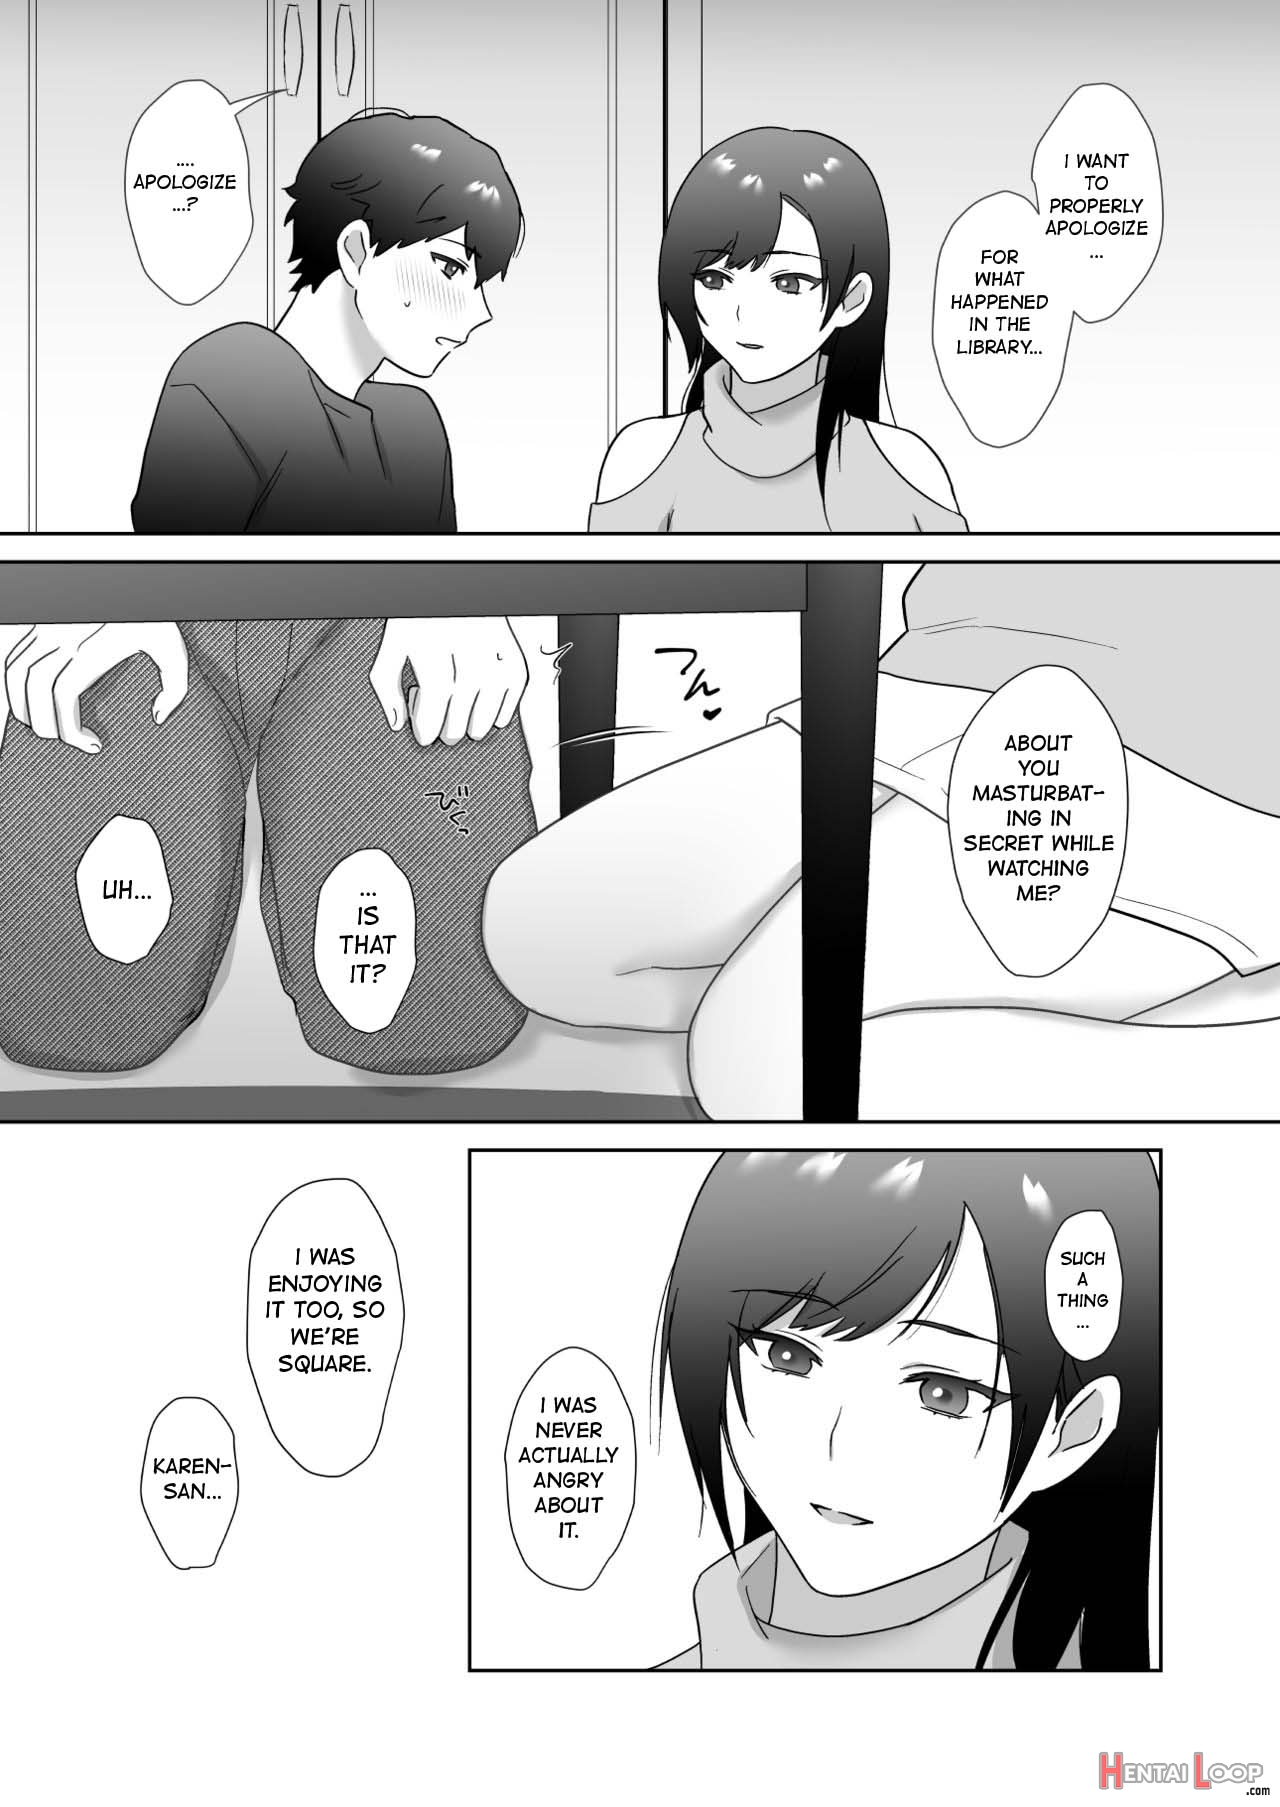 Toshoiin No Karen-san 2 page 10